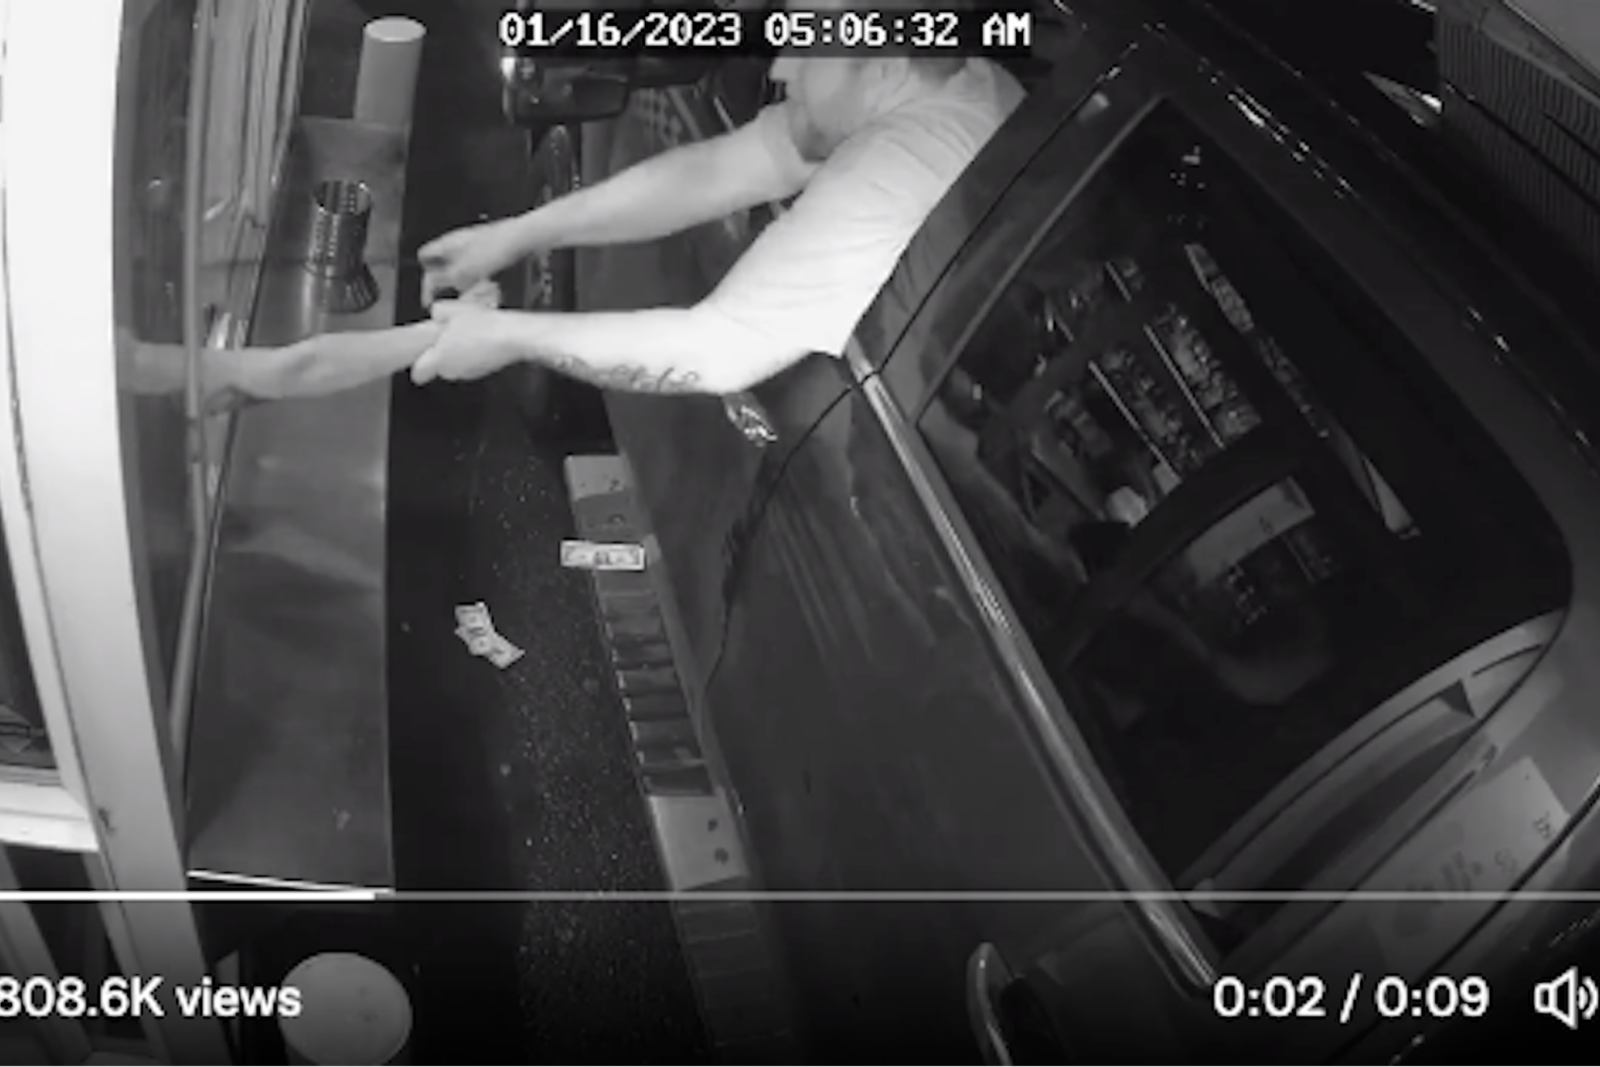 Man Attempts to Kidnap Barista at a Coffee Shop Drive-Thru Window